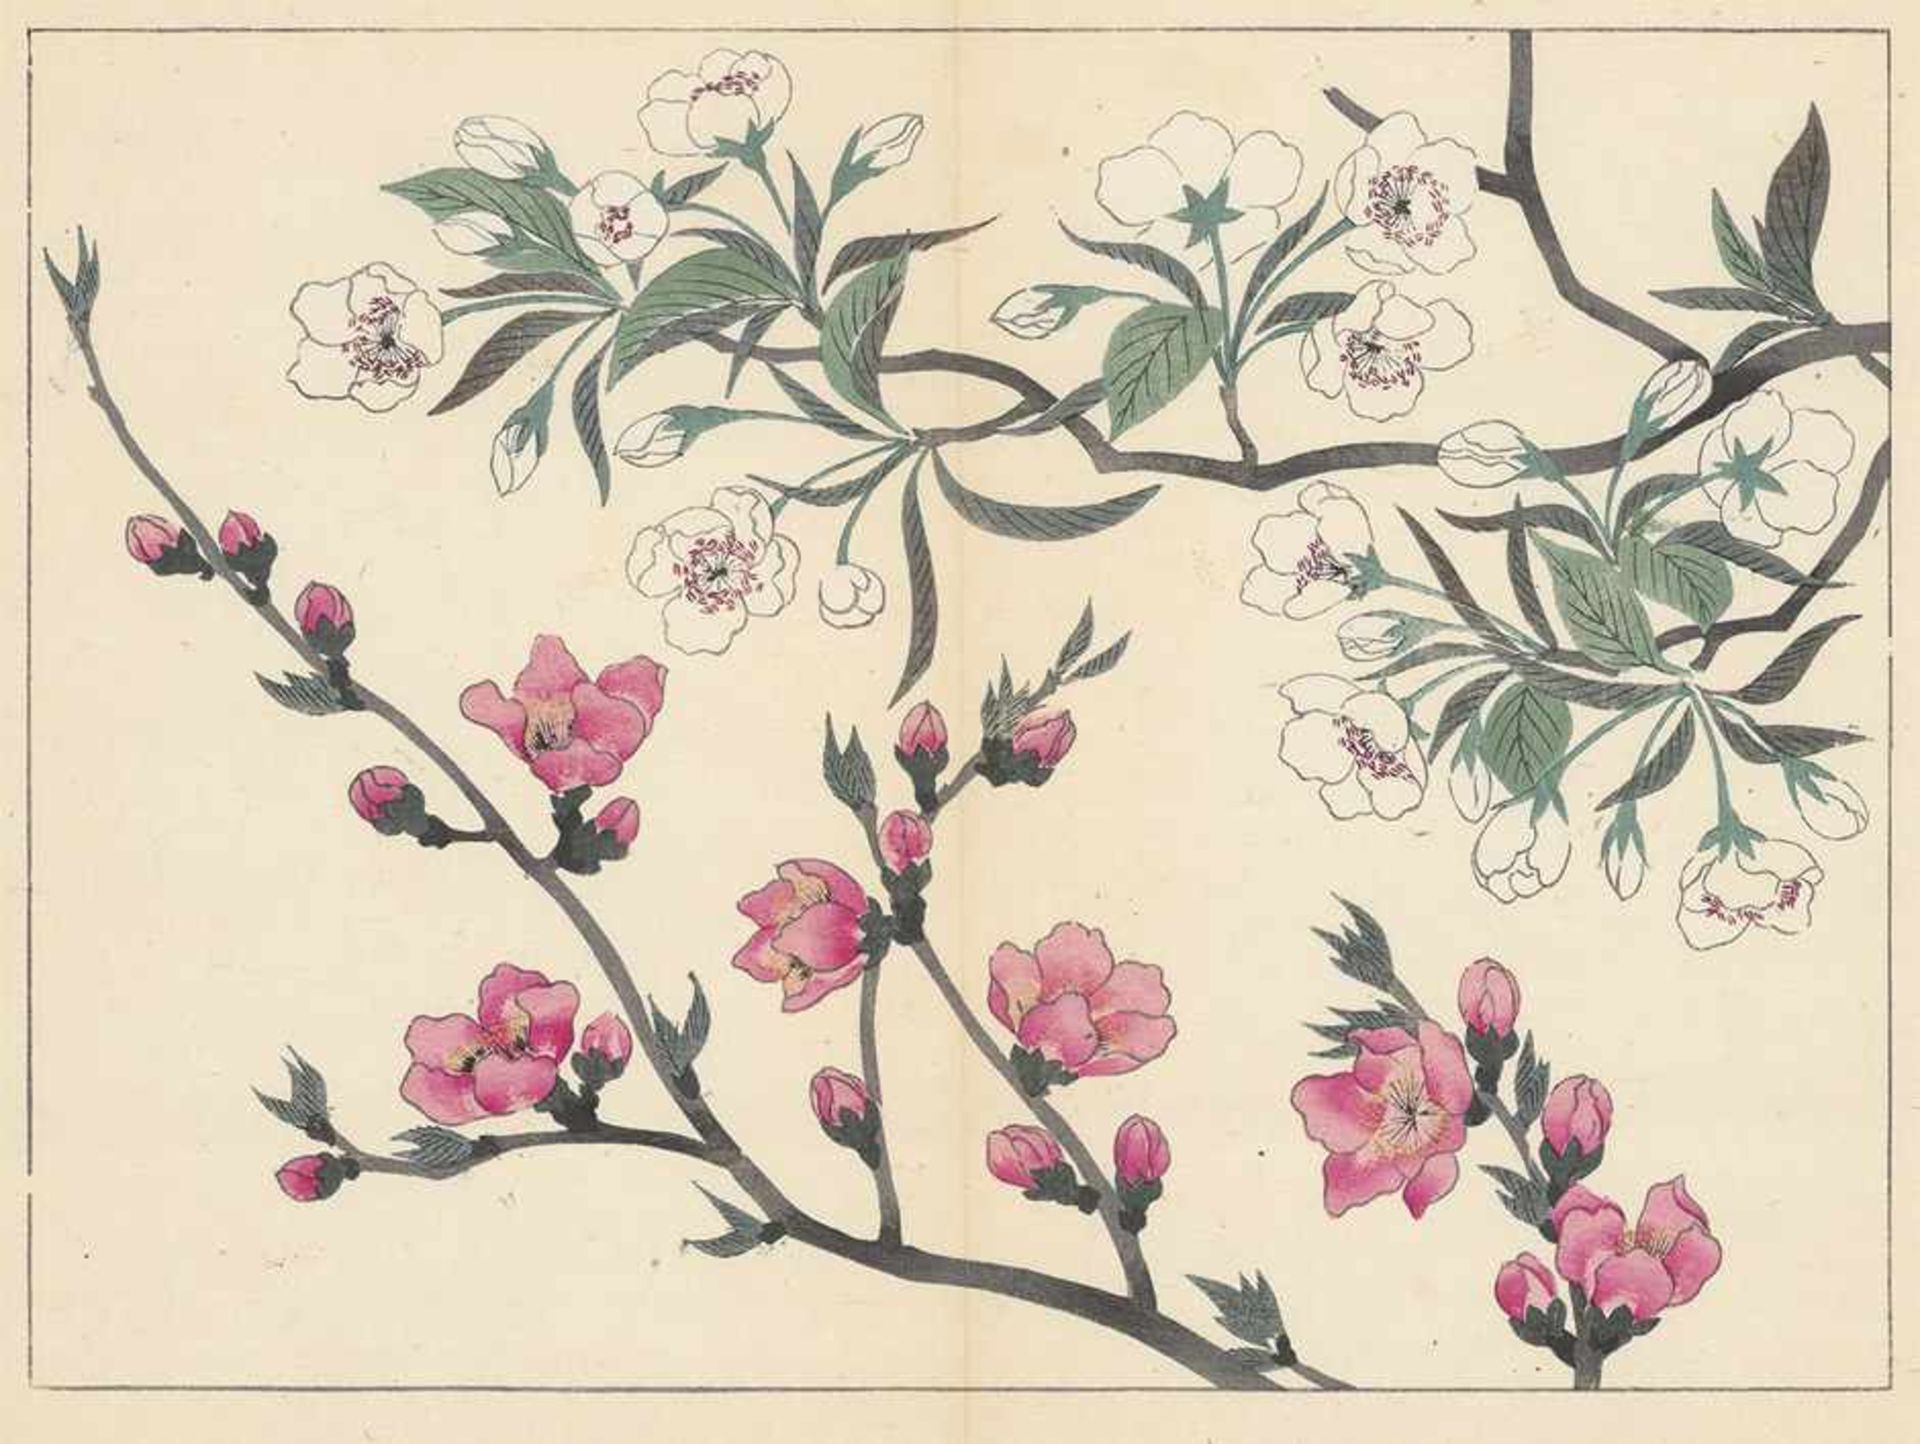 Shiki-no-hana: 4 Blätter aus den Jahreszeitlichen BlumenShiki-no-hana (japonice: Jahreszeitliche